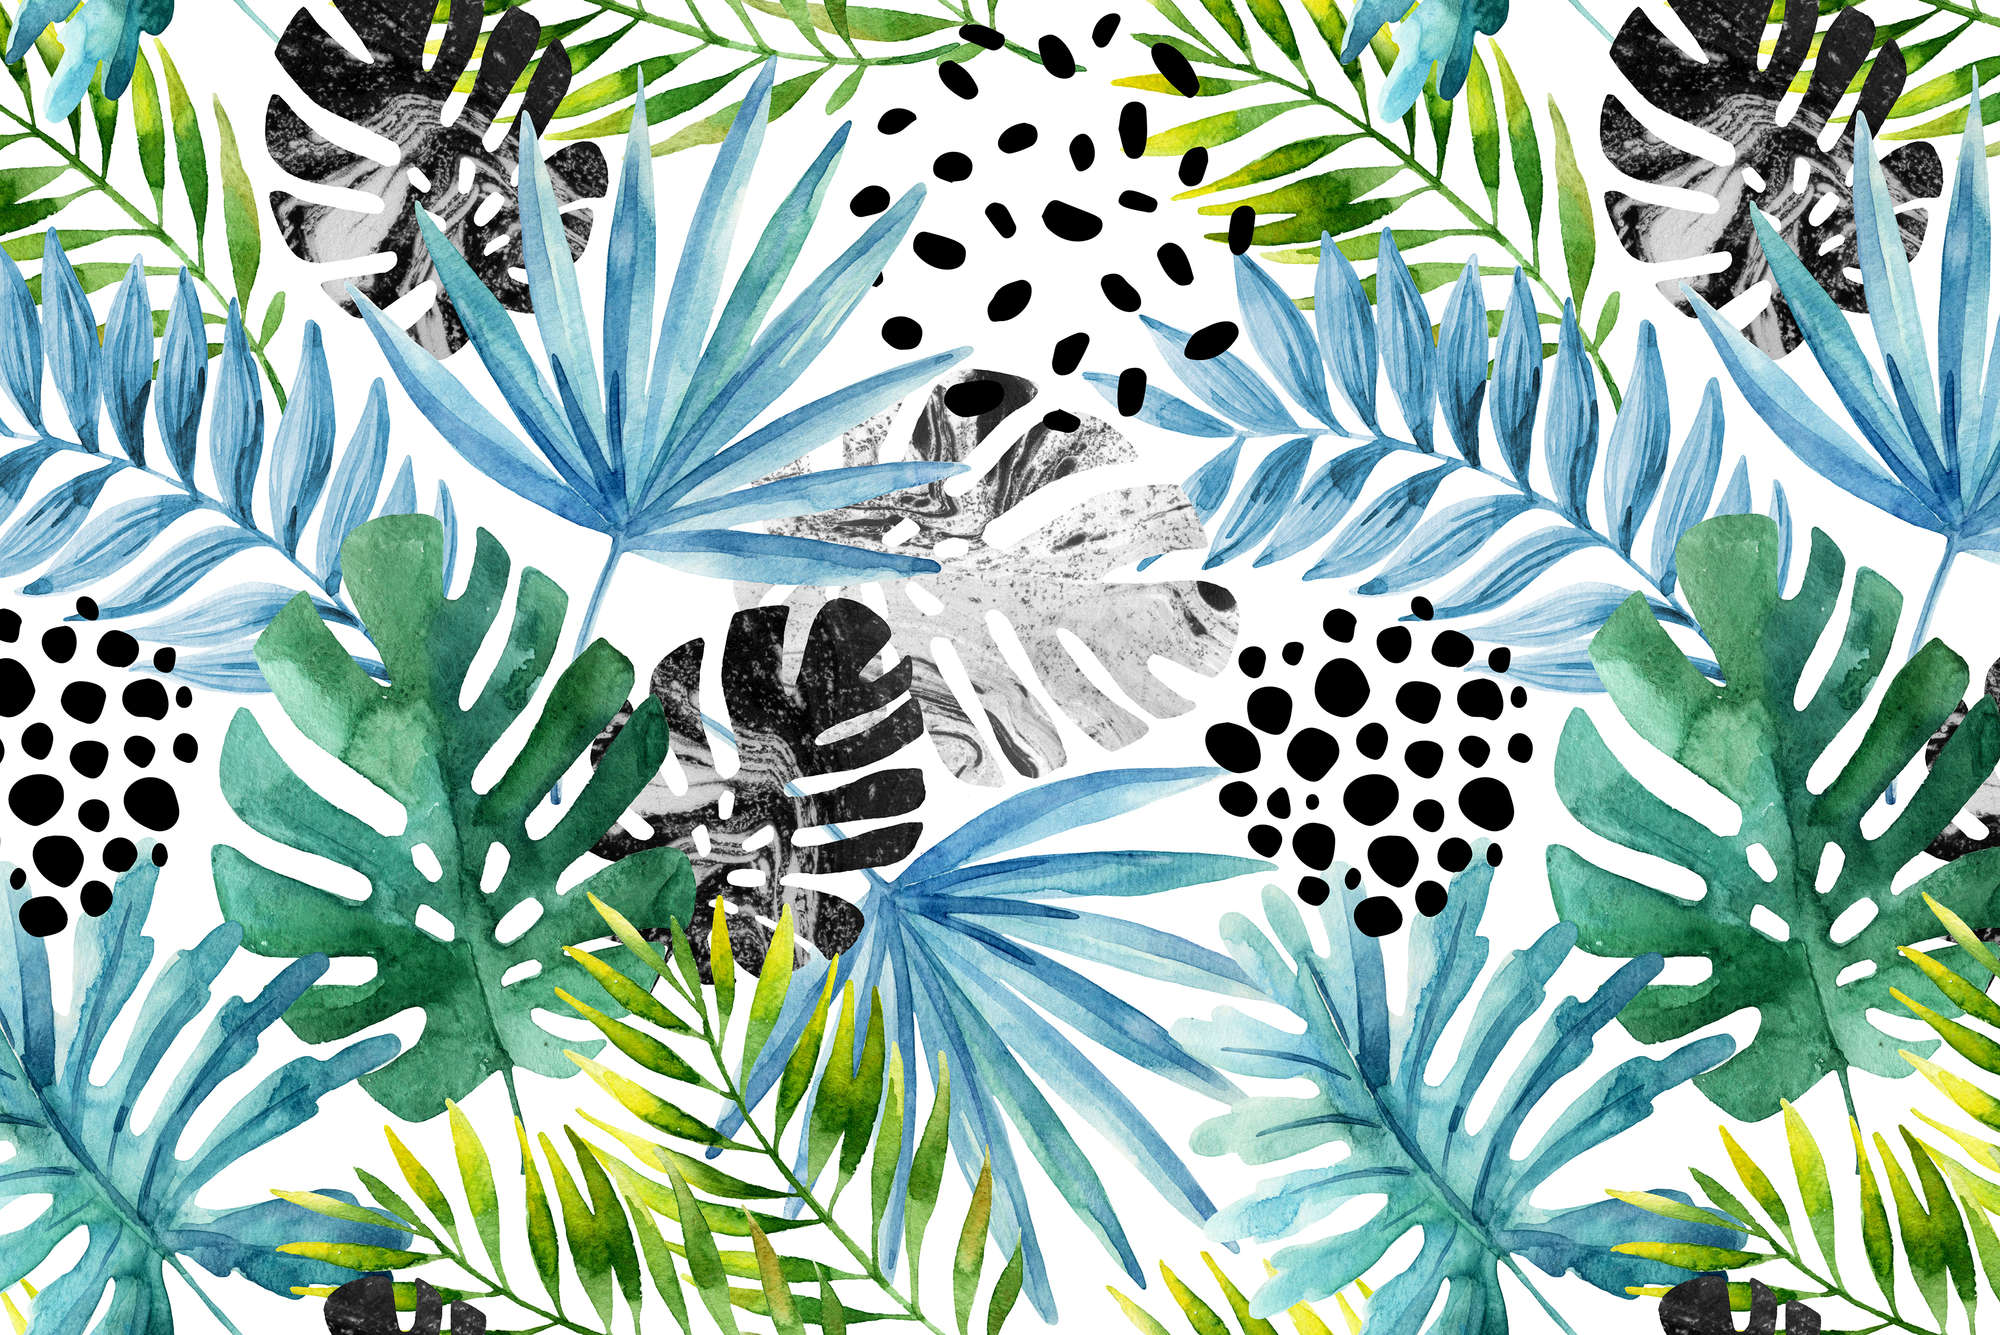             Carta da parati grafica giungla piante colorate su pile liscio opaco
        